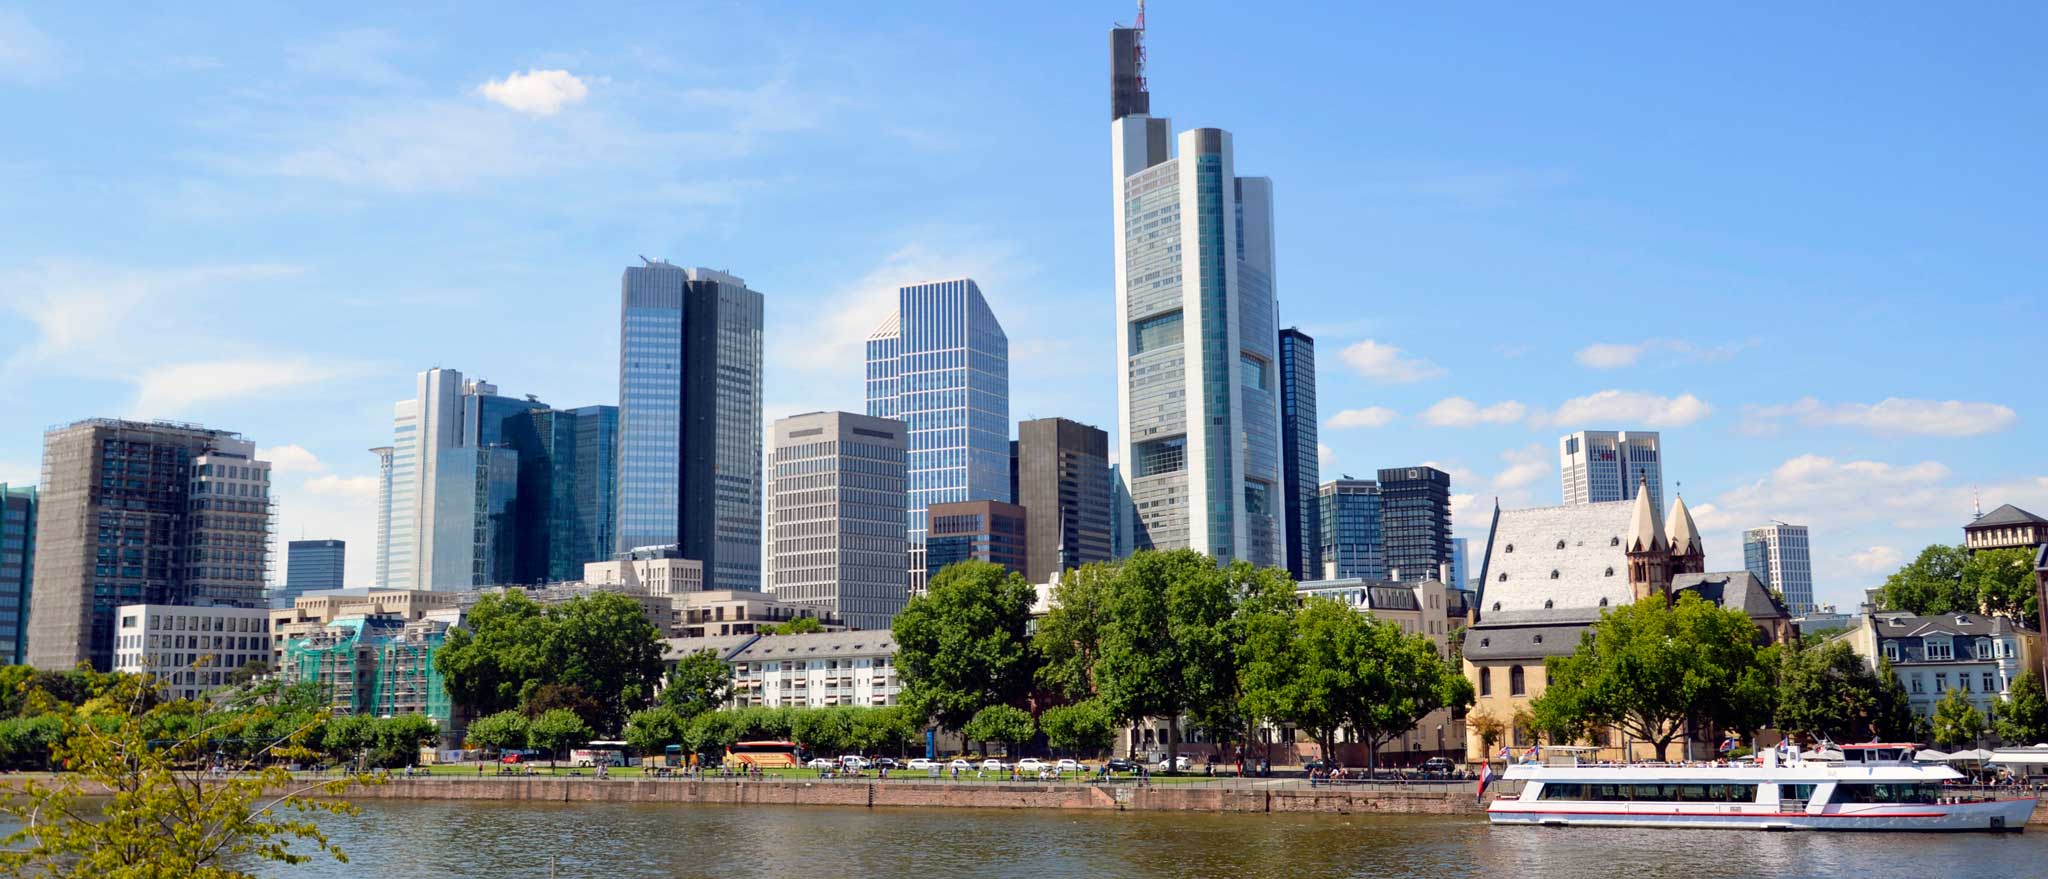 Frankfurt_city